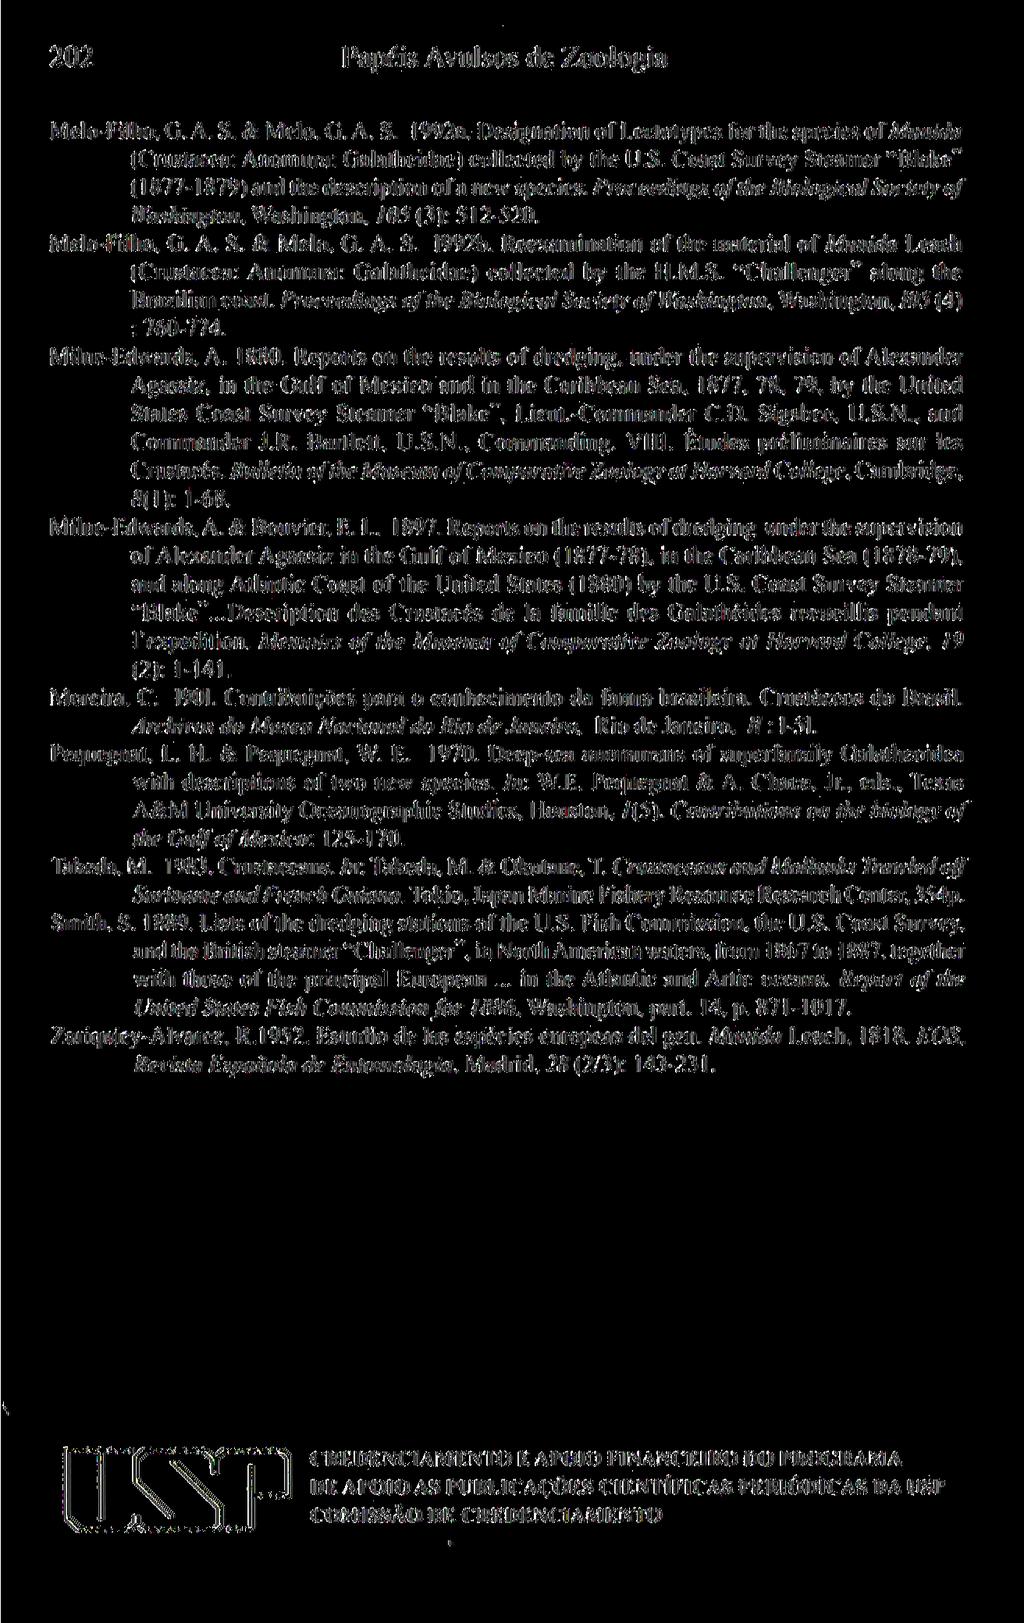 202 Papéis Avulsos de Zoologia Melo-Filho, G. A. 5. & Melo, G. A. S. 1992a, Designatkm oflectotypes lòr the speciesol" ShmUkt (Crustácea: Anomura: tlalalheidae) colleeted by lhe U.S. Cousl Survey Stettmer"Blake" (1877-1879) and (he descri pi ion ola new species.